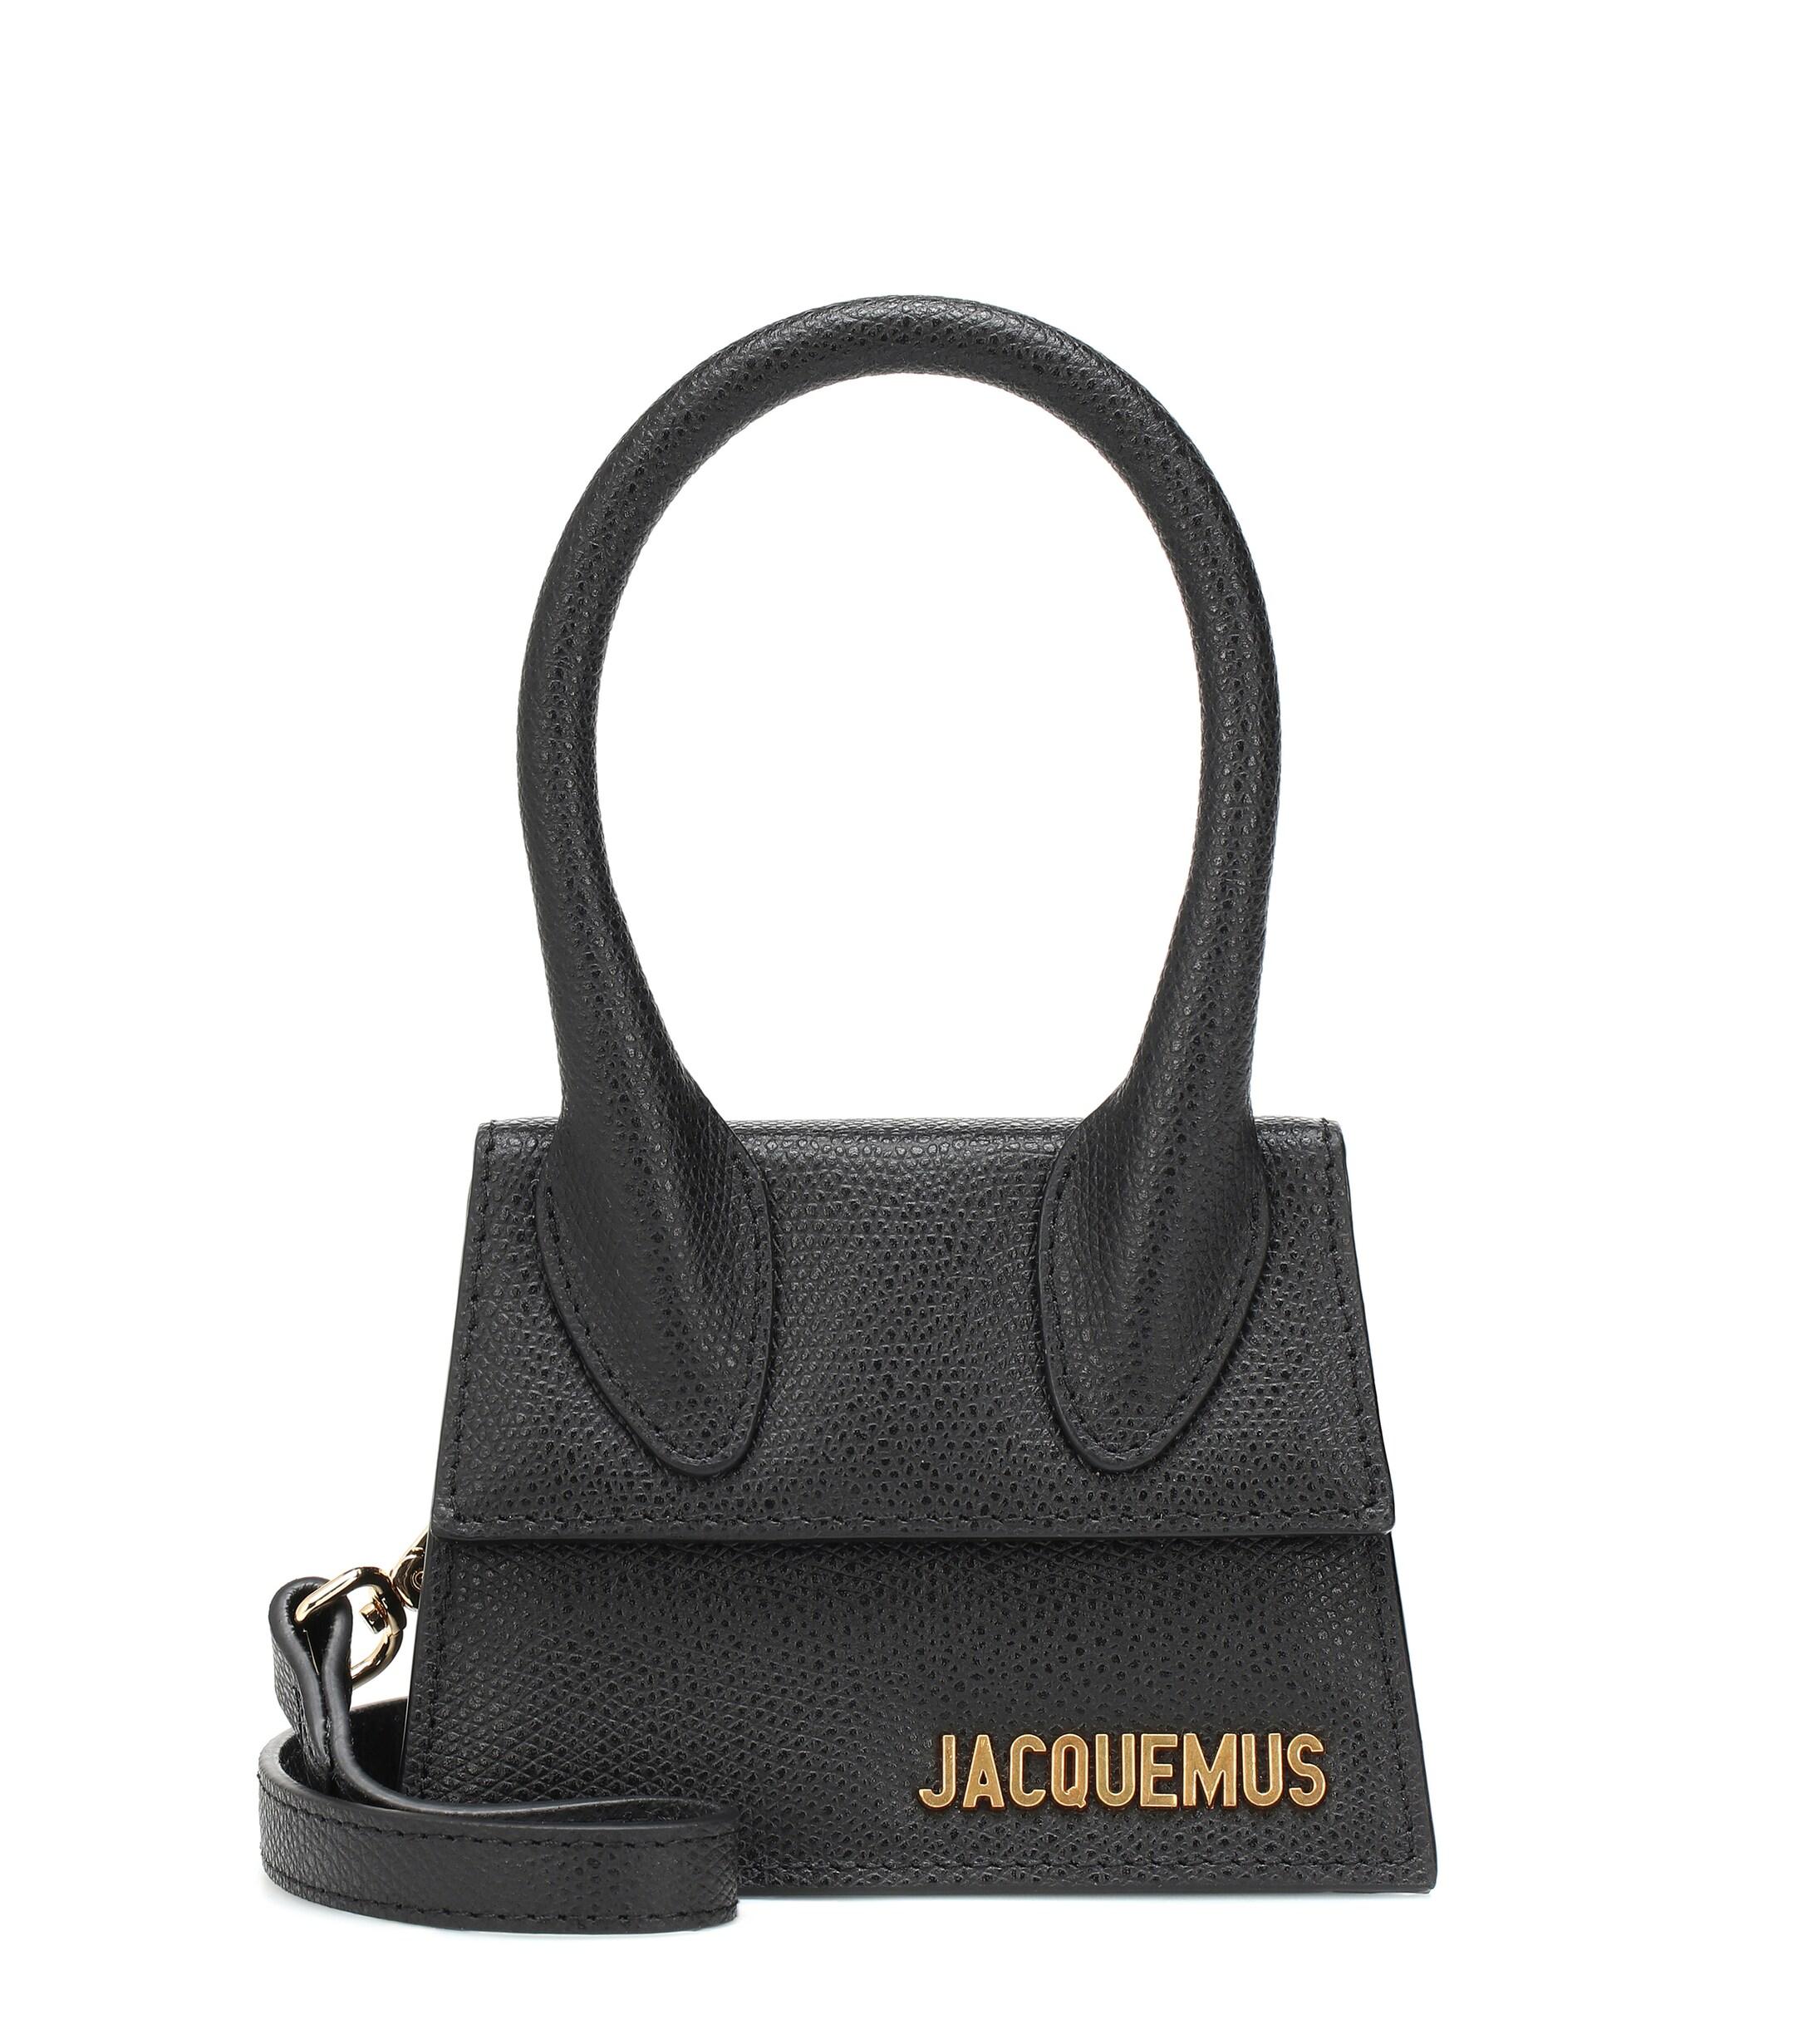 Jacquemus Le Chiquito Leather Mini Bag in Black